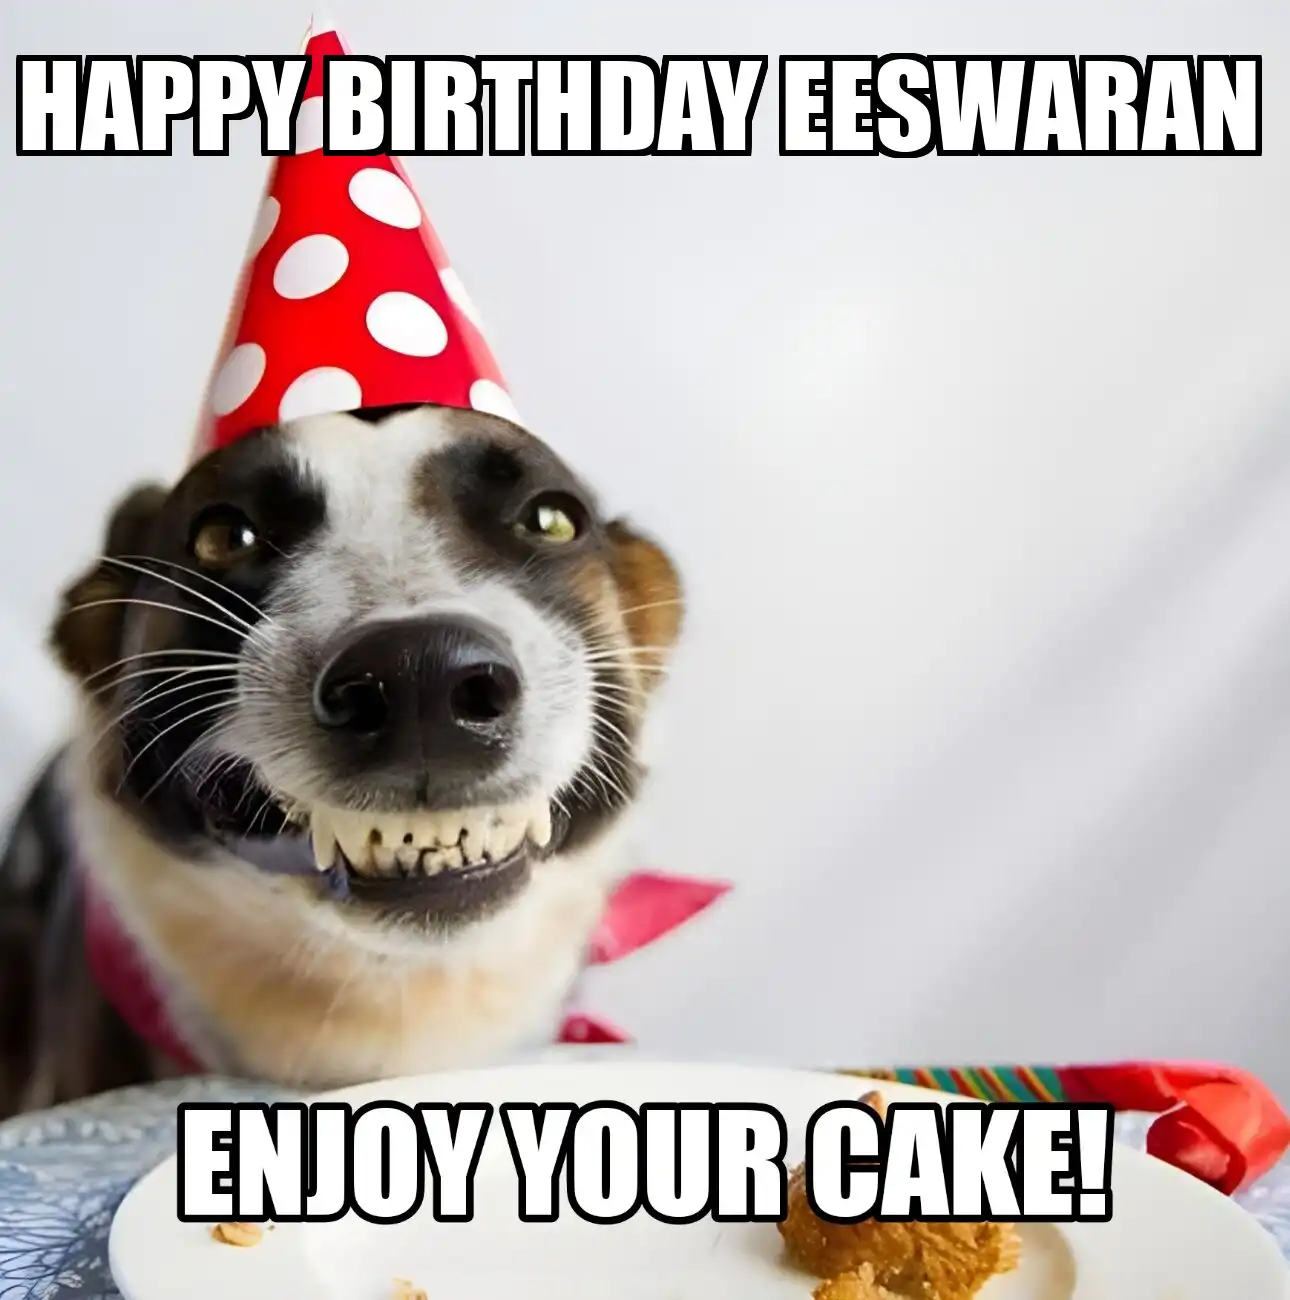 Happy Birthday Eeswaran Enjoy Your Cake Dog Meme